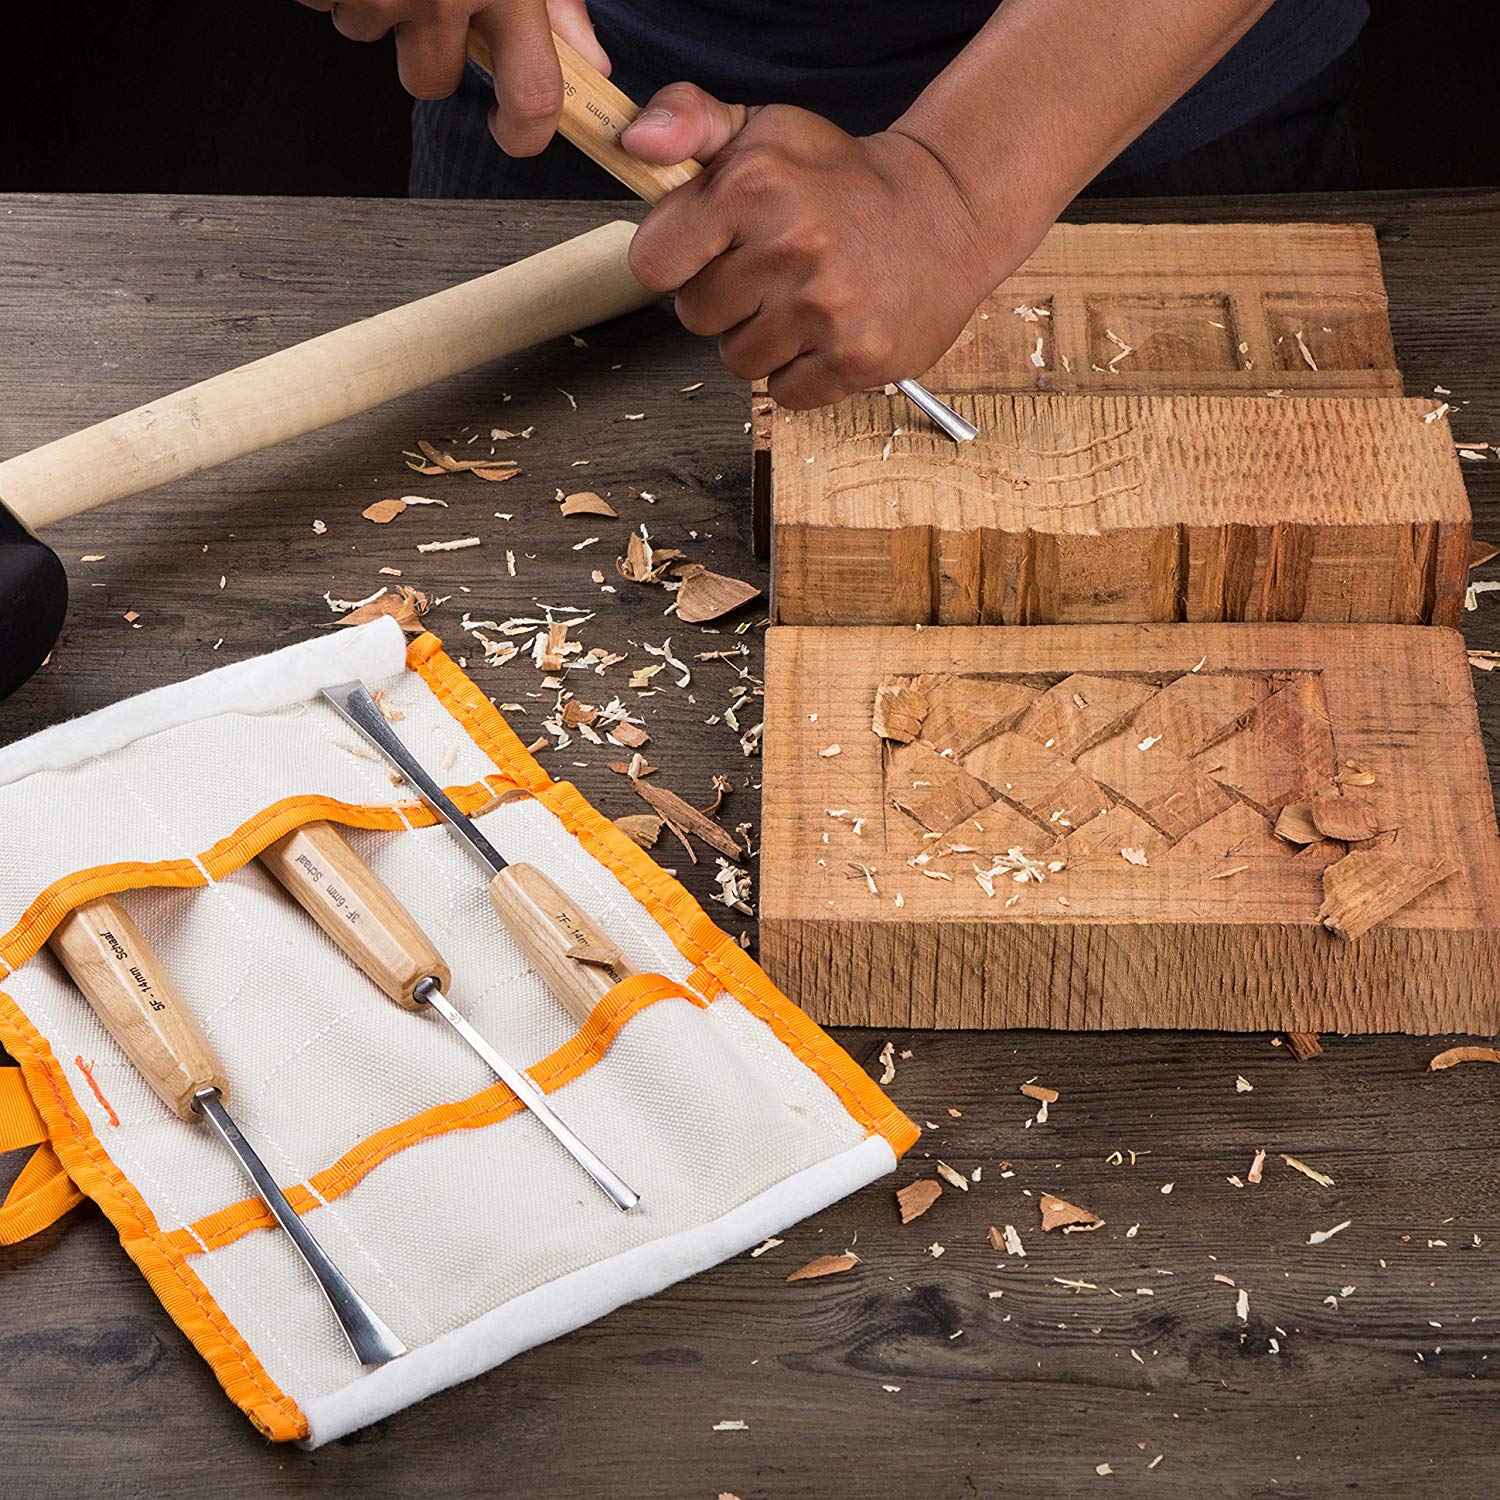 Schaaf Wood Carving Tools Fishtail Set - 4pc Gouges UK